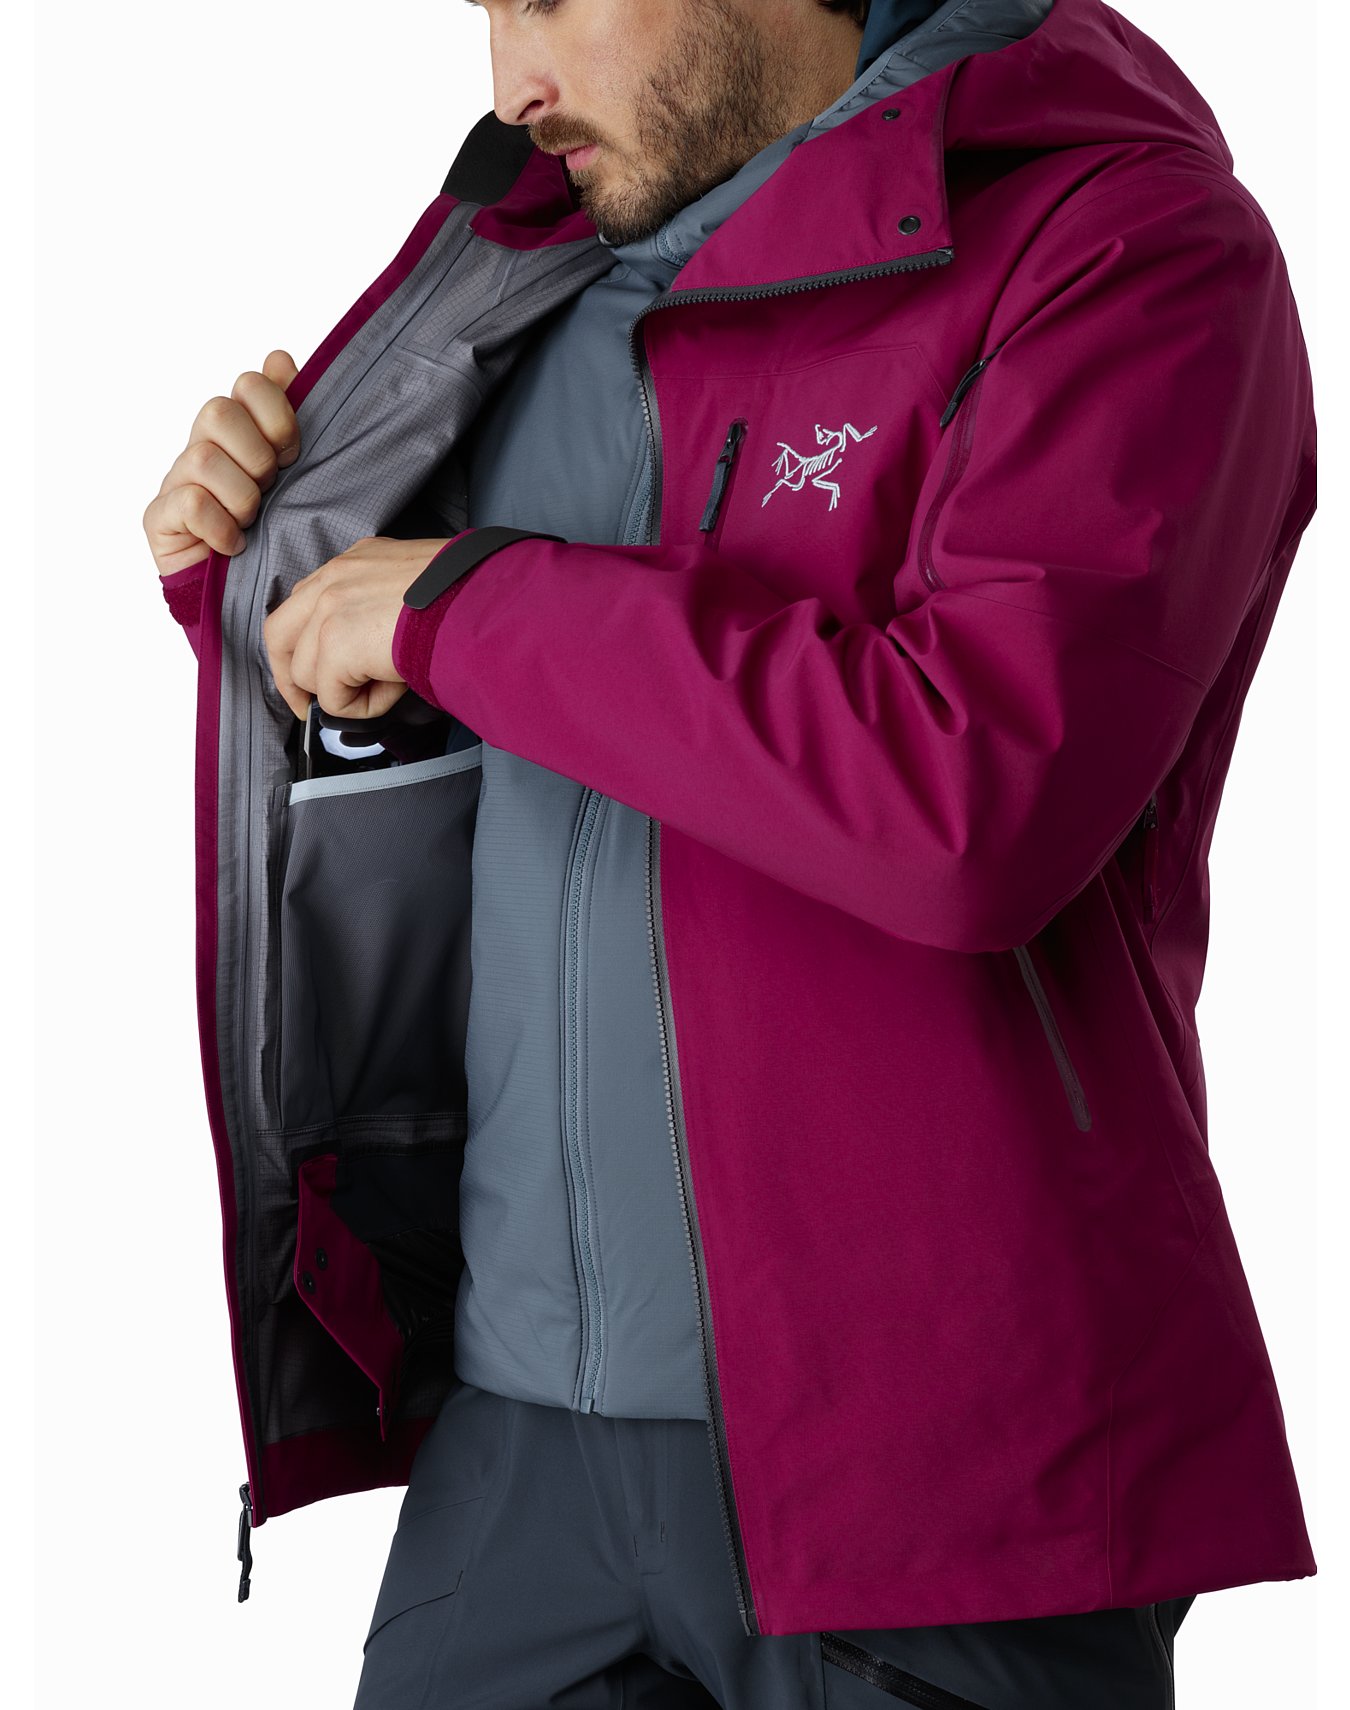 Arc'teryx Sidewinder Jacket, men's, discontinued Fall 2019 model 